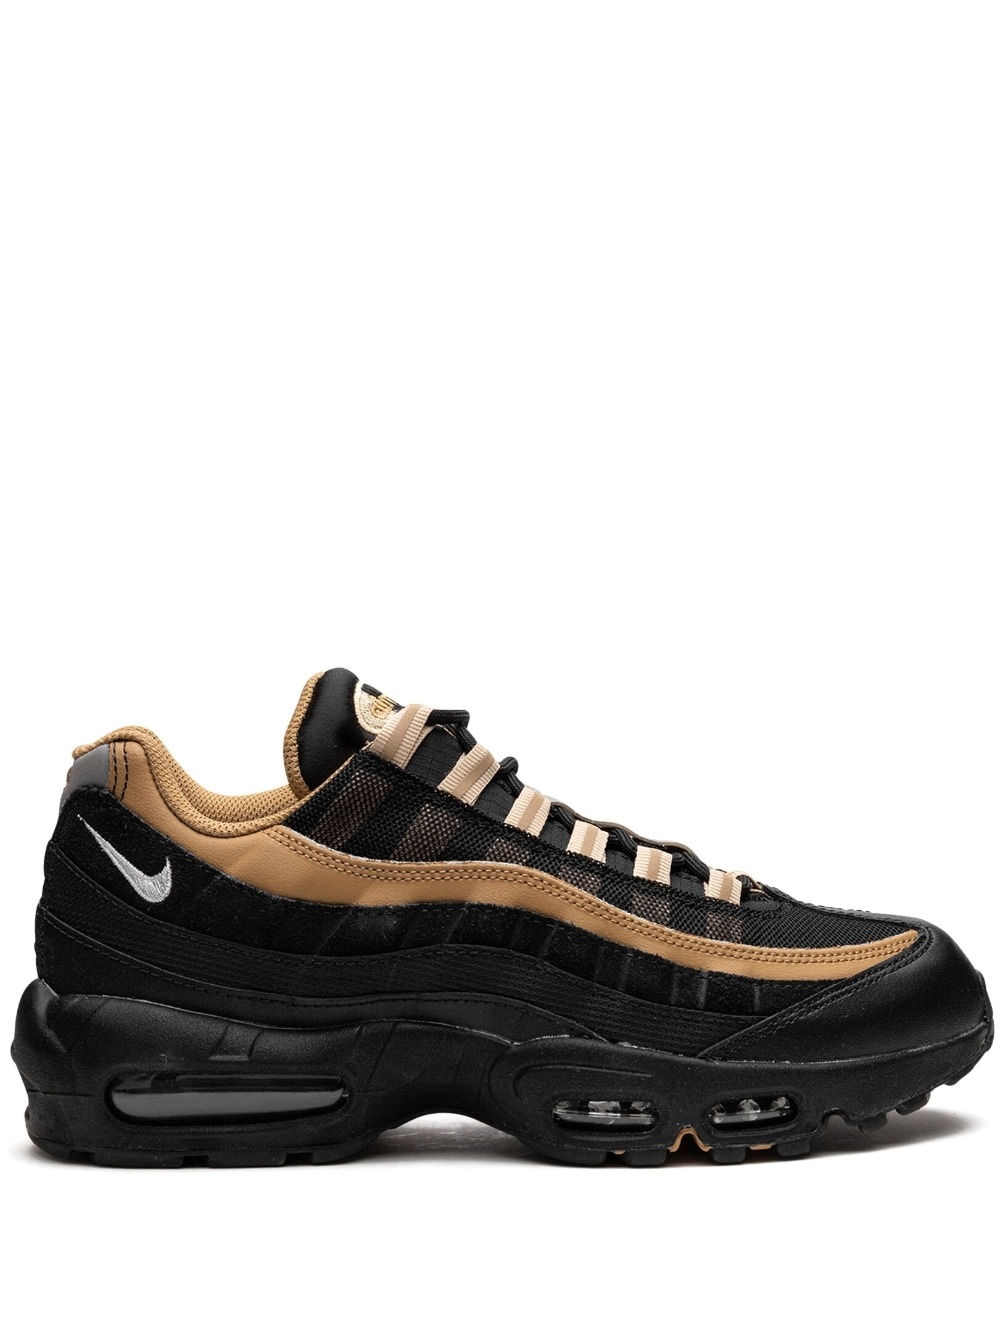 Air Max 95 "Black Elemental Gold" sneakers - 1